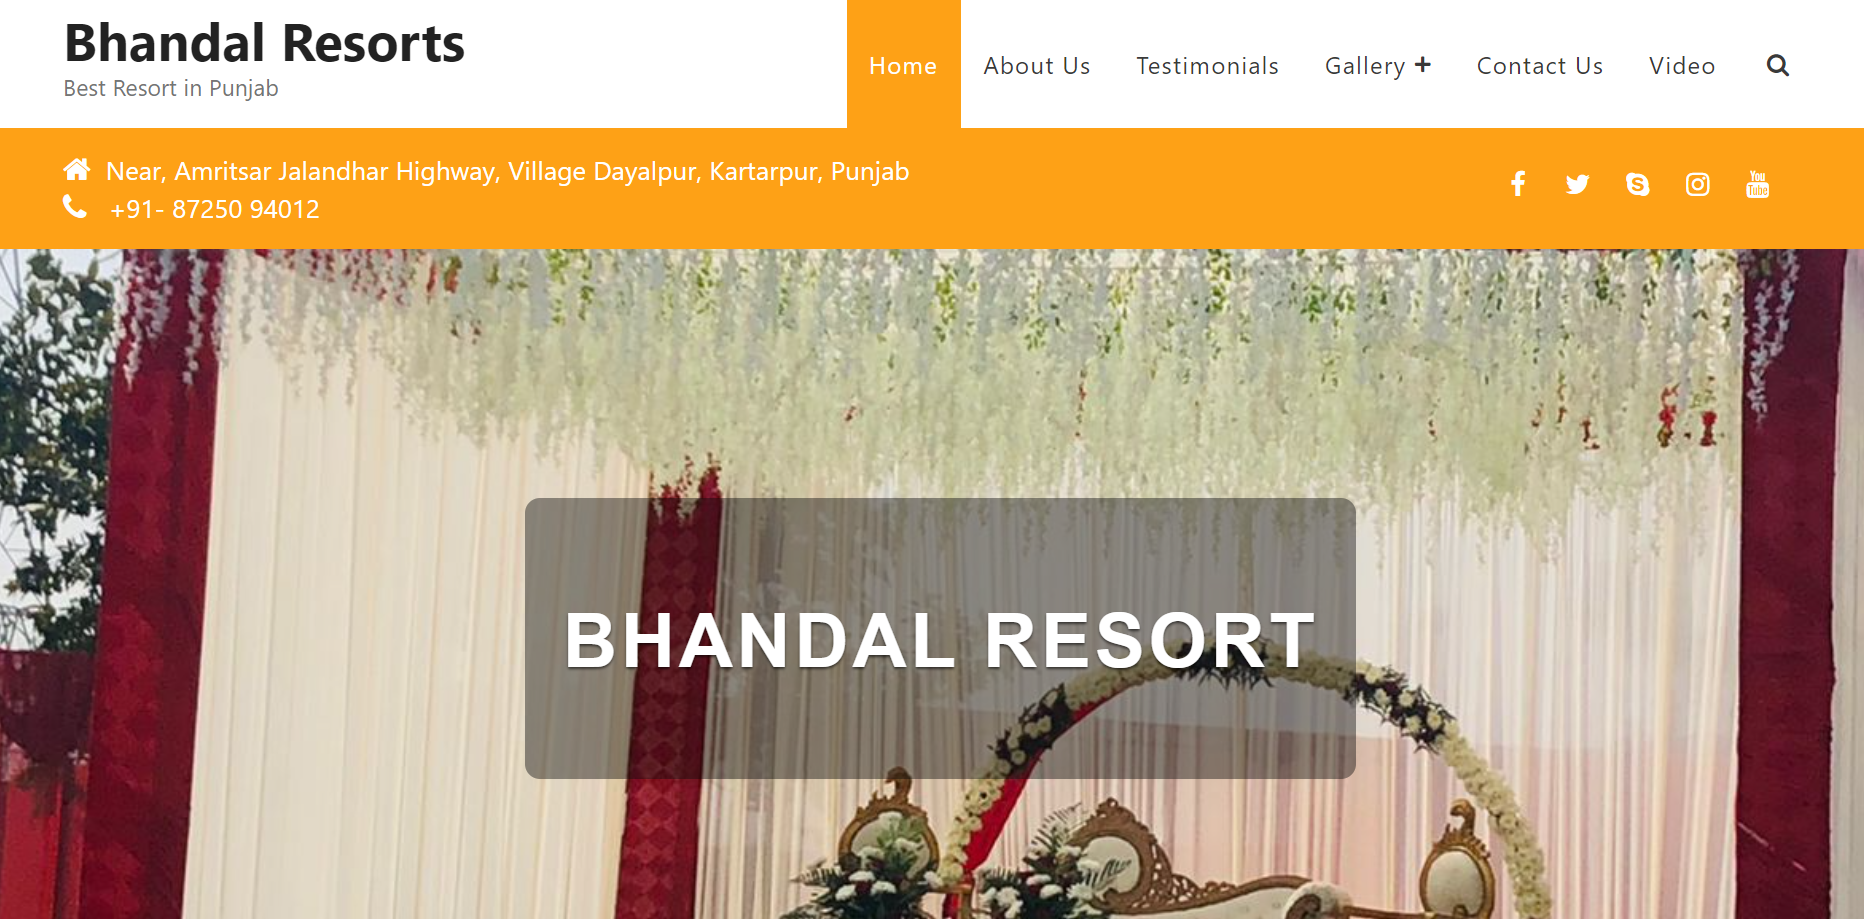 Bhandal Resorts Website Designed